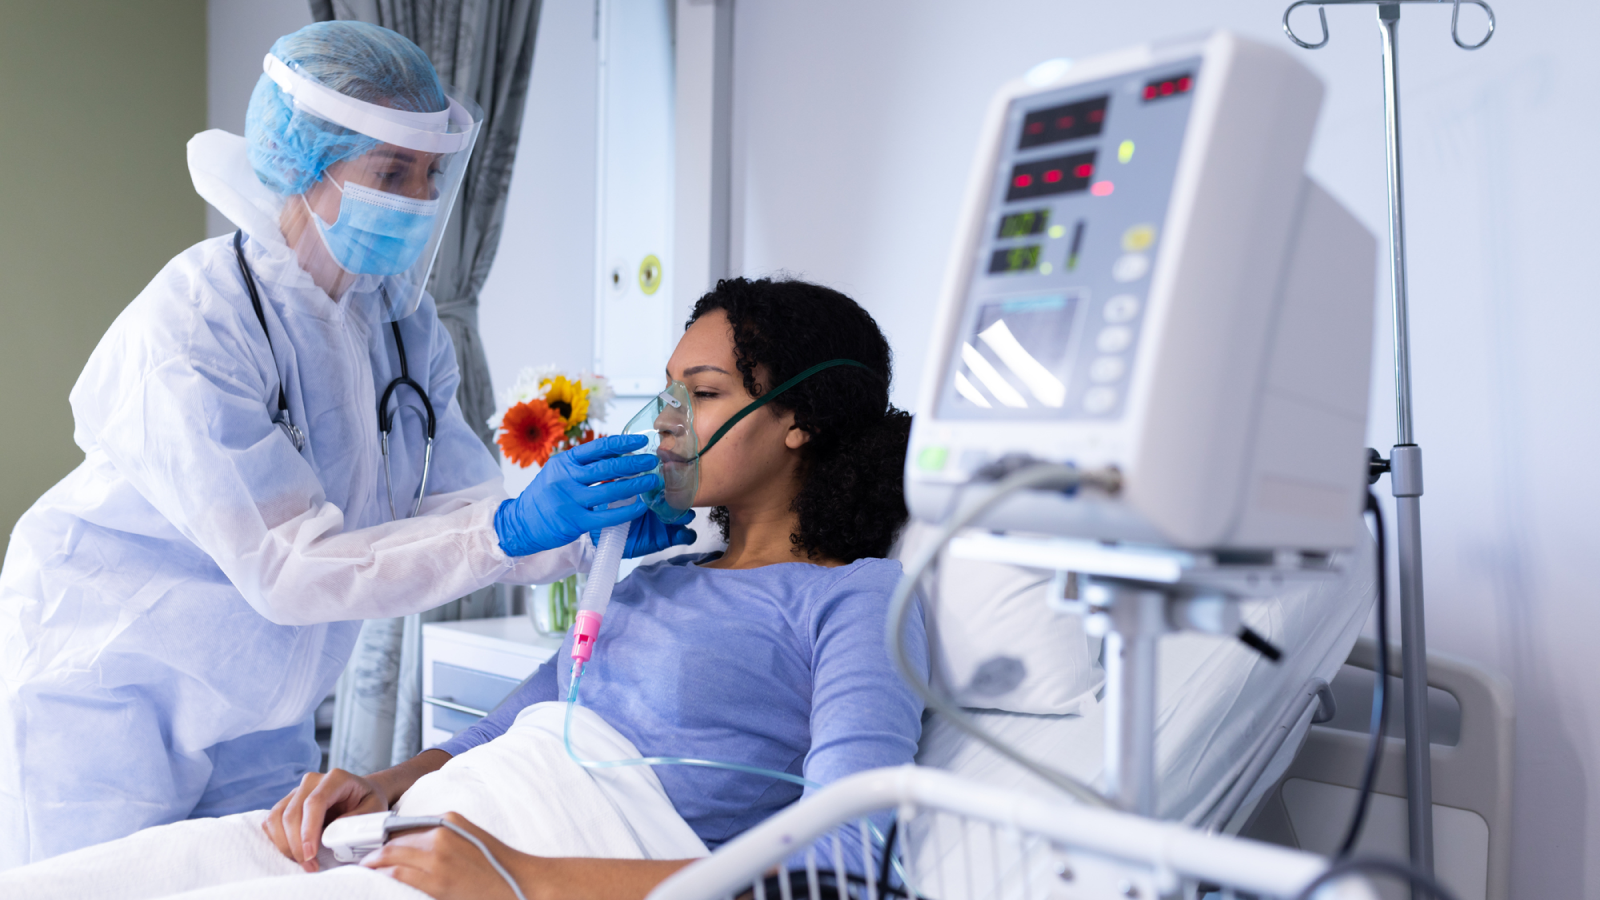 【JAMA】COVID-19 による呼吸不全患者、高流量酸素で28日死亡率は低下せず